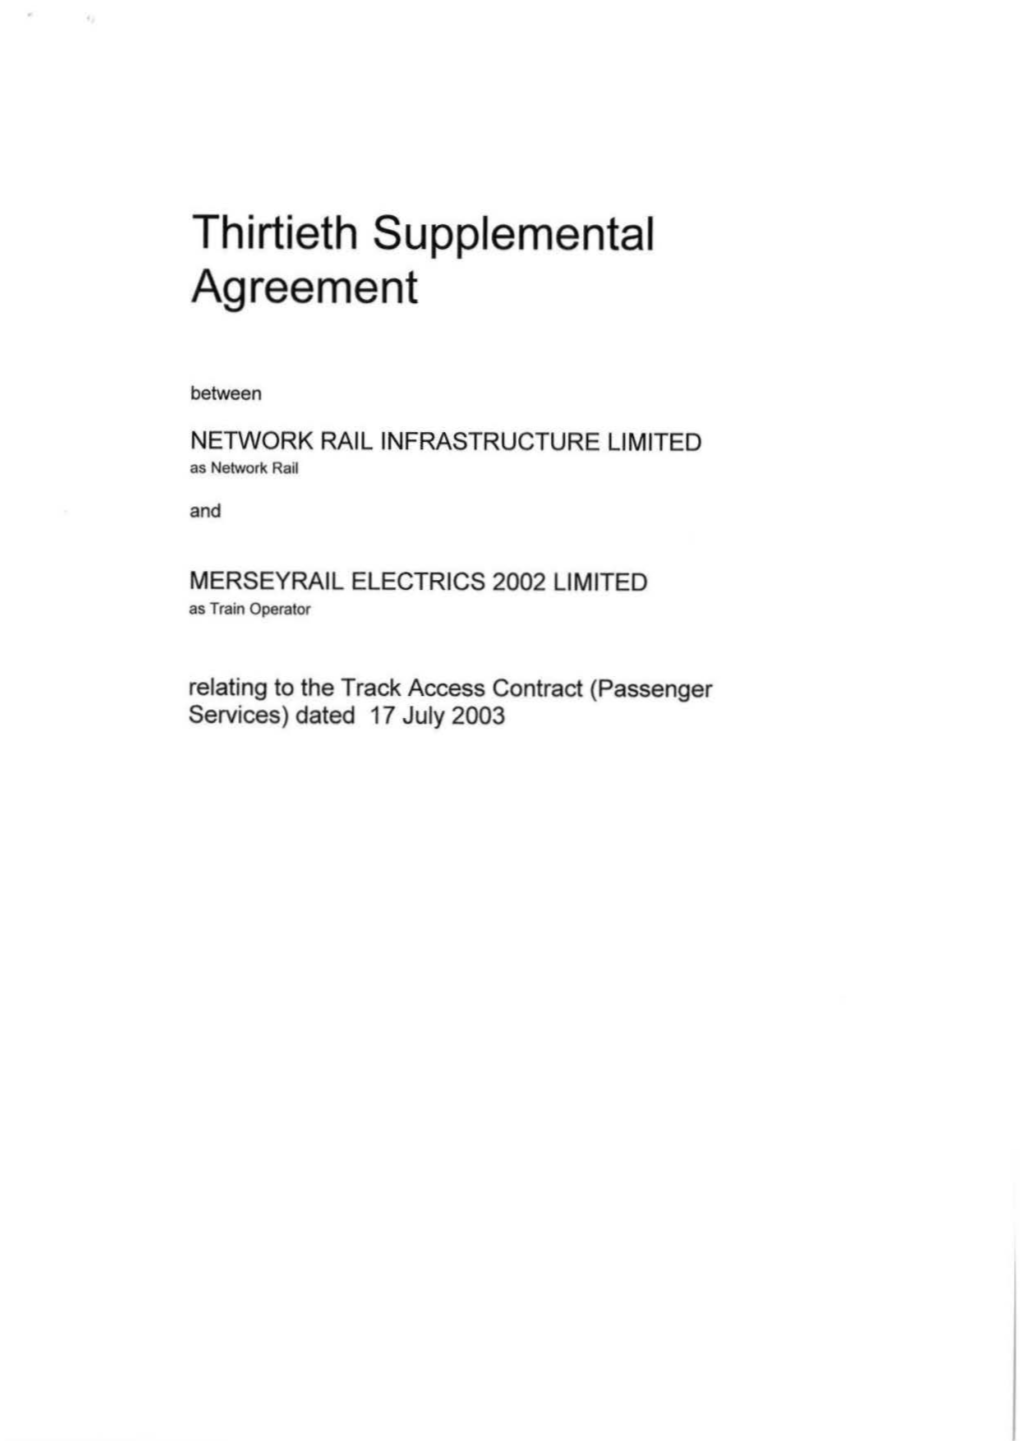 Merseyrail 30Th SA Signed Agreement Redacted